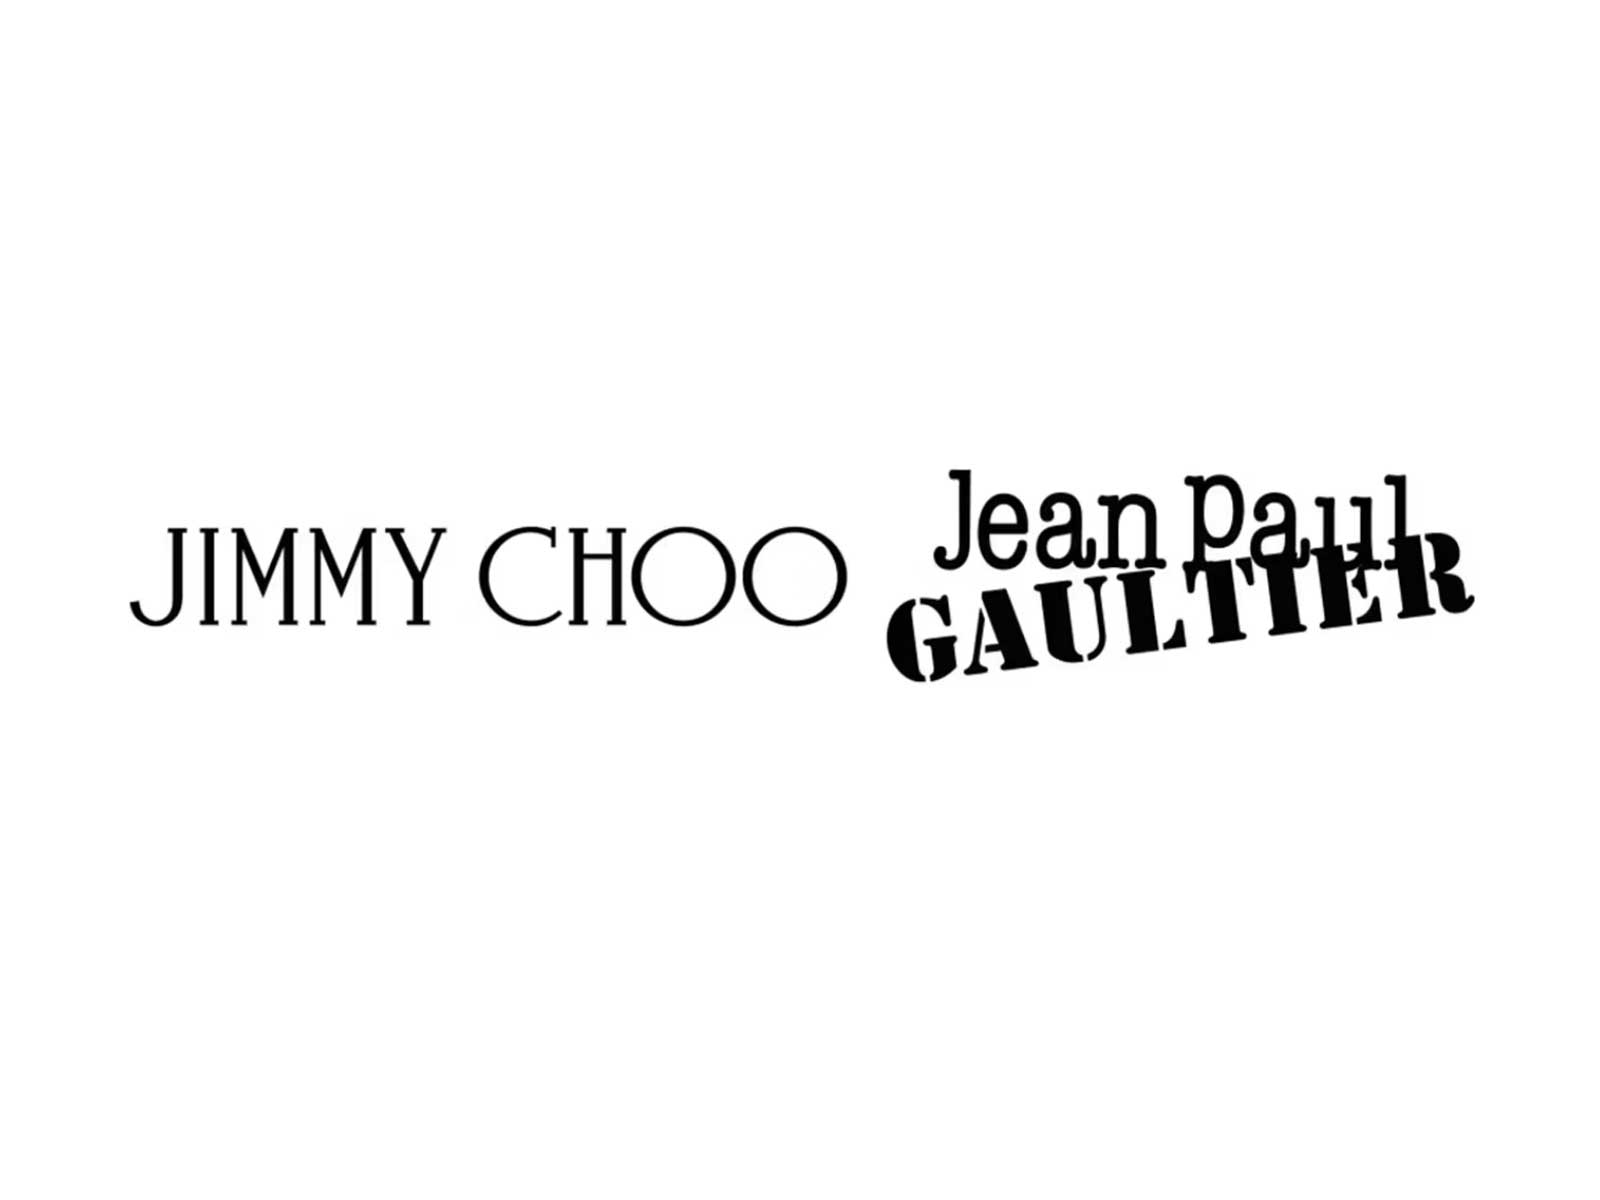 Jimmy Choo - The Fashiongton Post